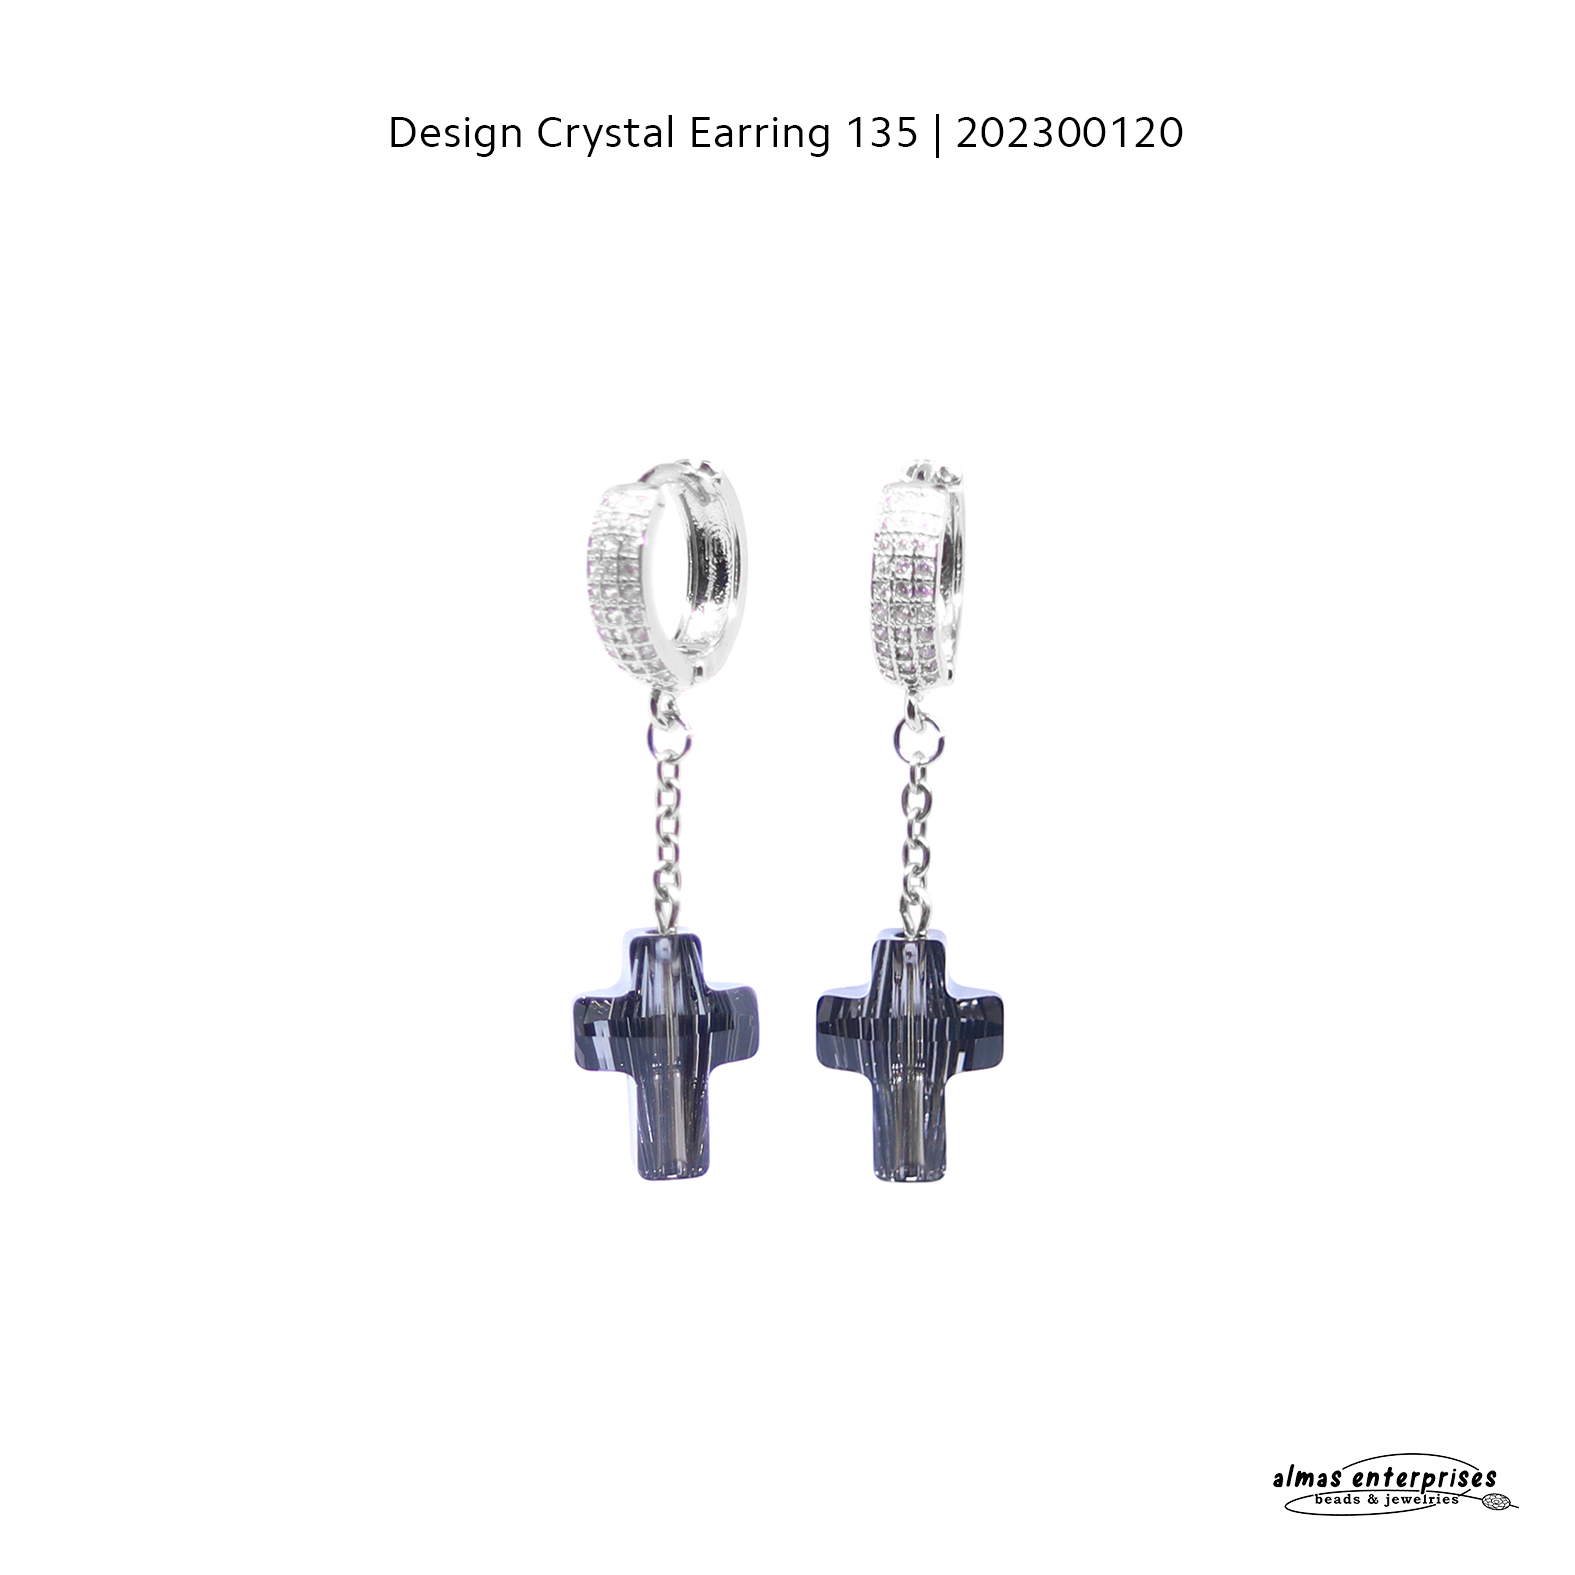 Design Crystal Earring 135